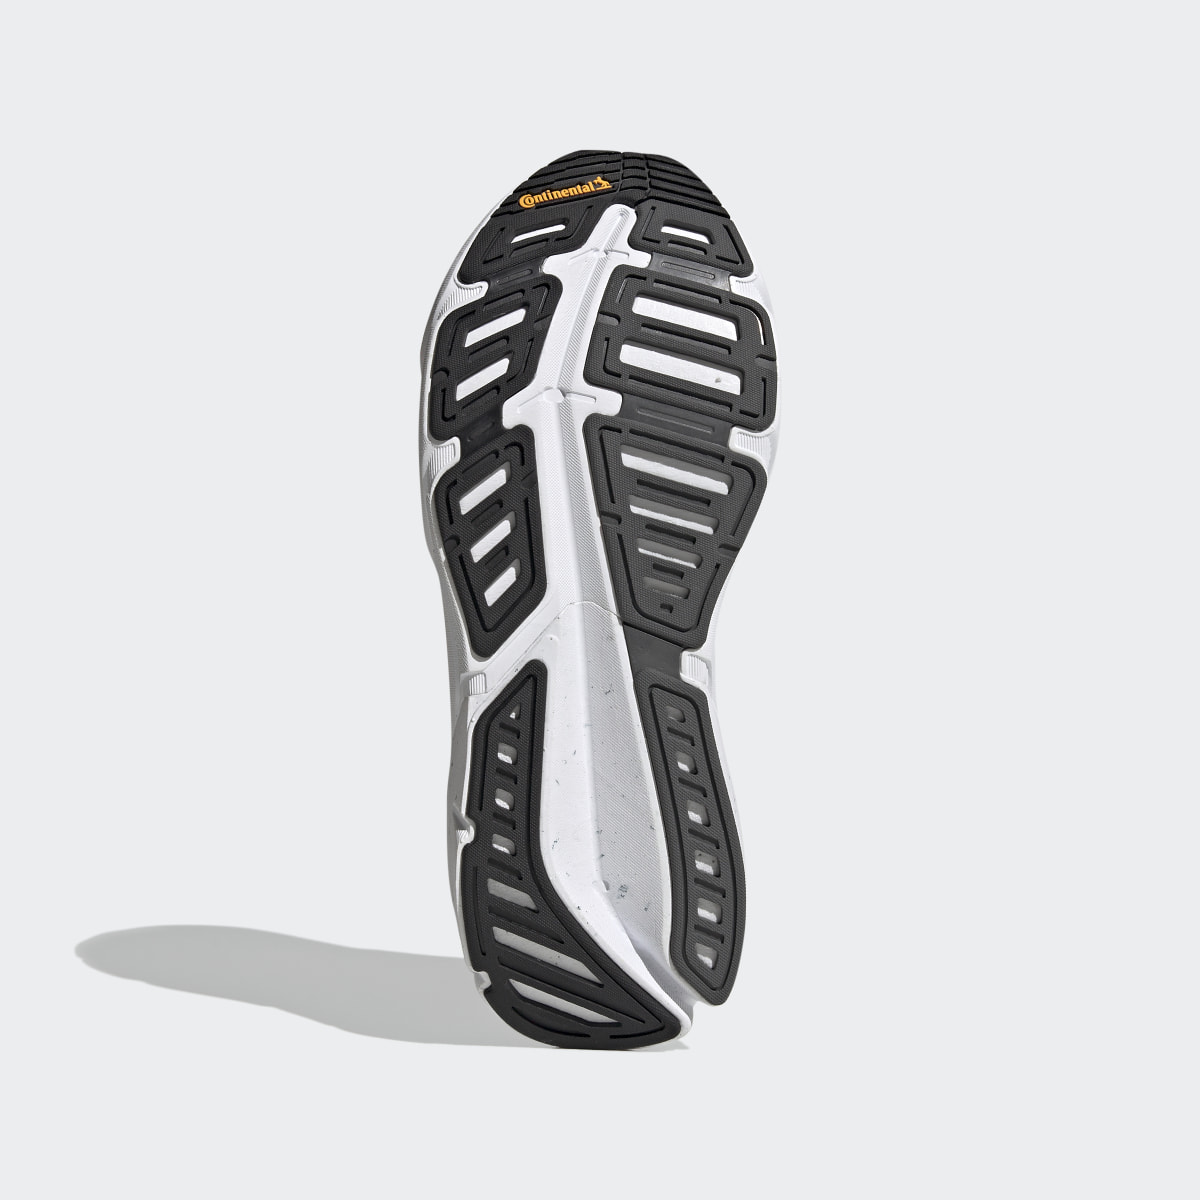 Adidas Adistar Running Shoes. 4